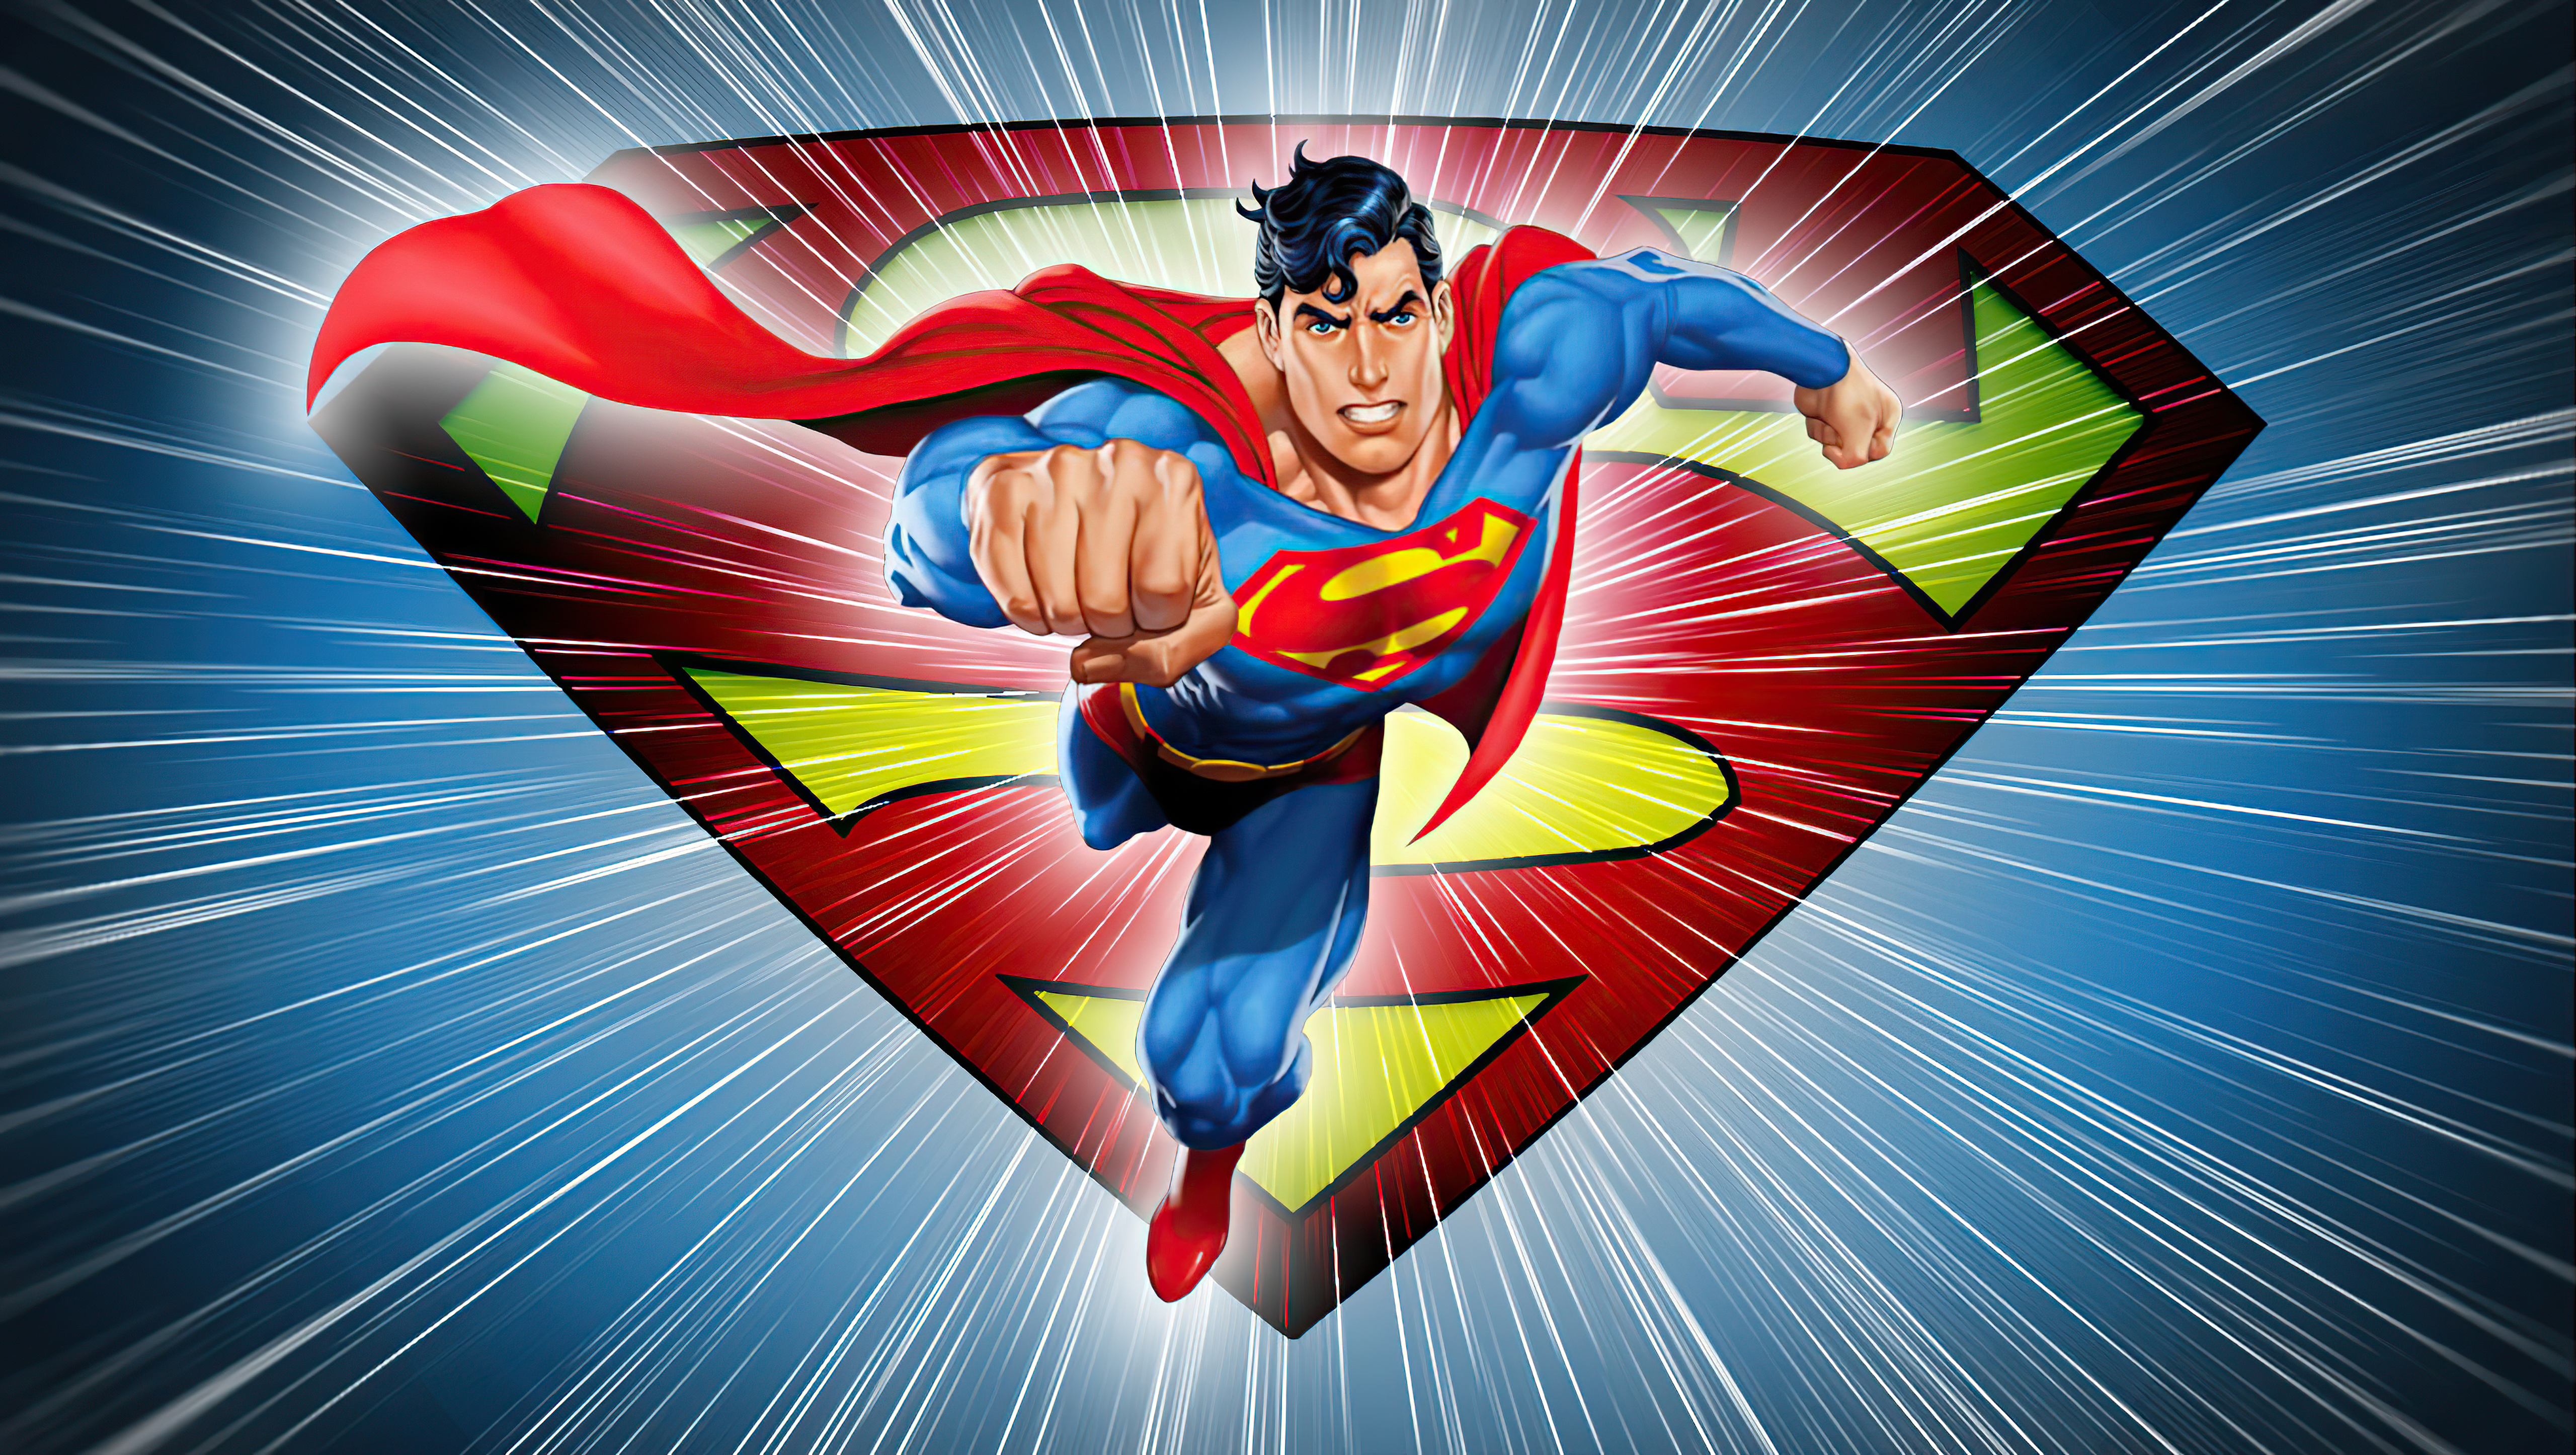 Superman 4k Ultra HD Wallpaper by superman8193